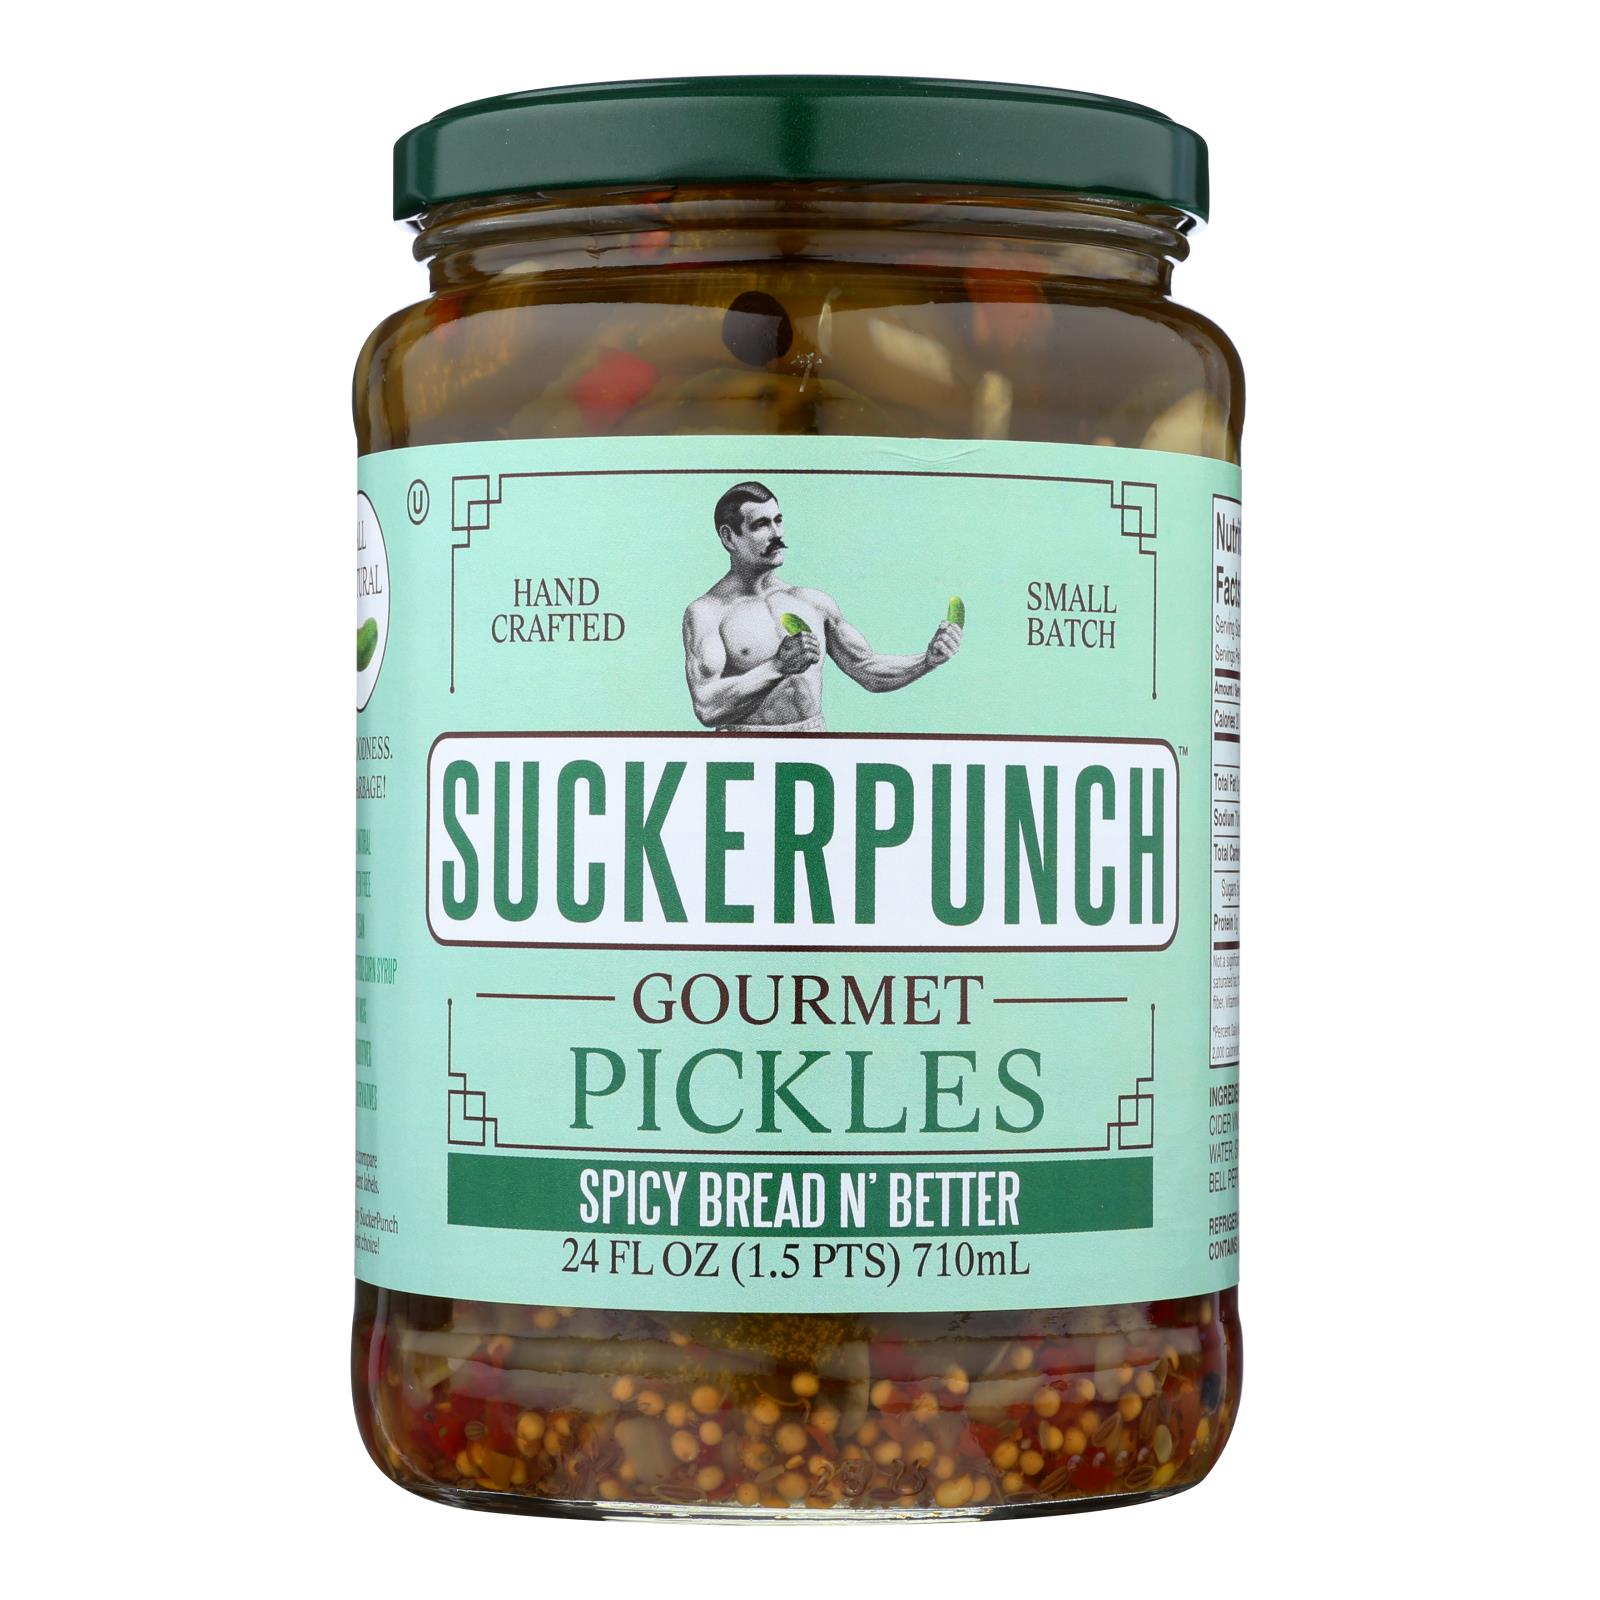 Suckerpunch Spicy Bread N' Better Gourmet Pickles - 6개 묶음상품 - 24 FZ